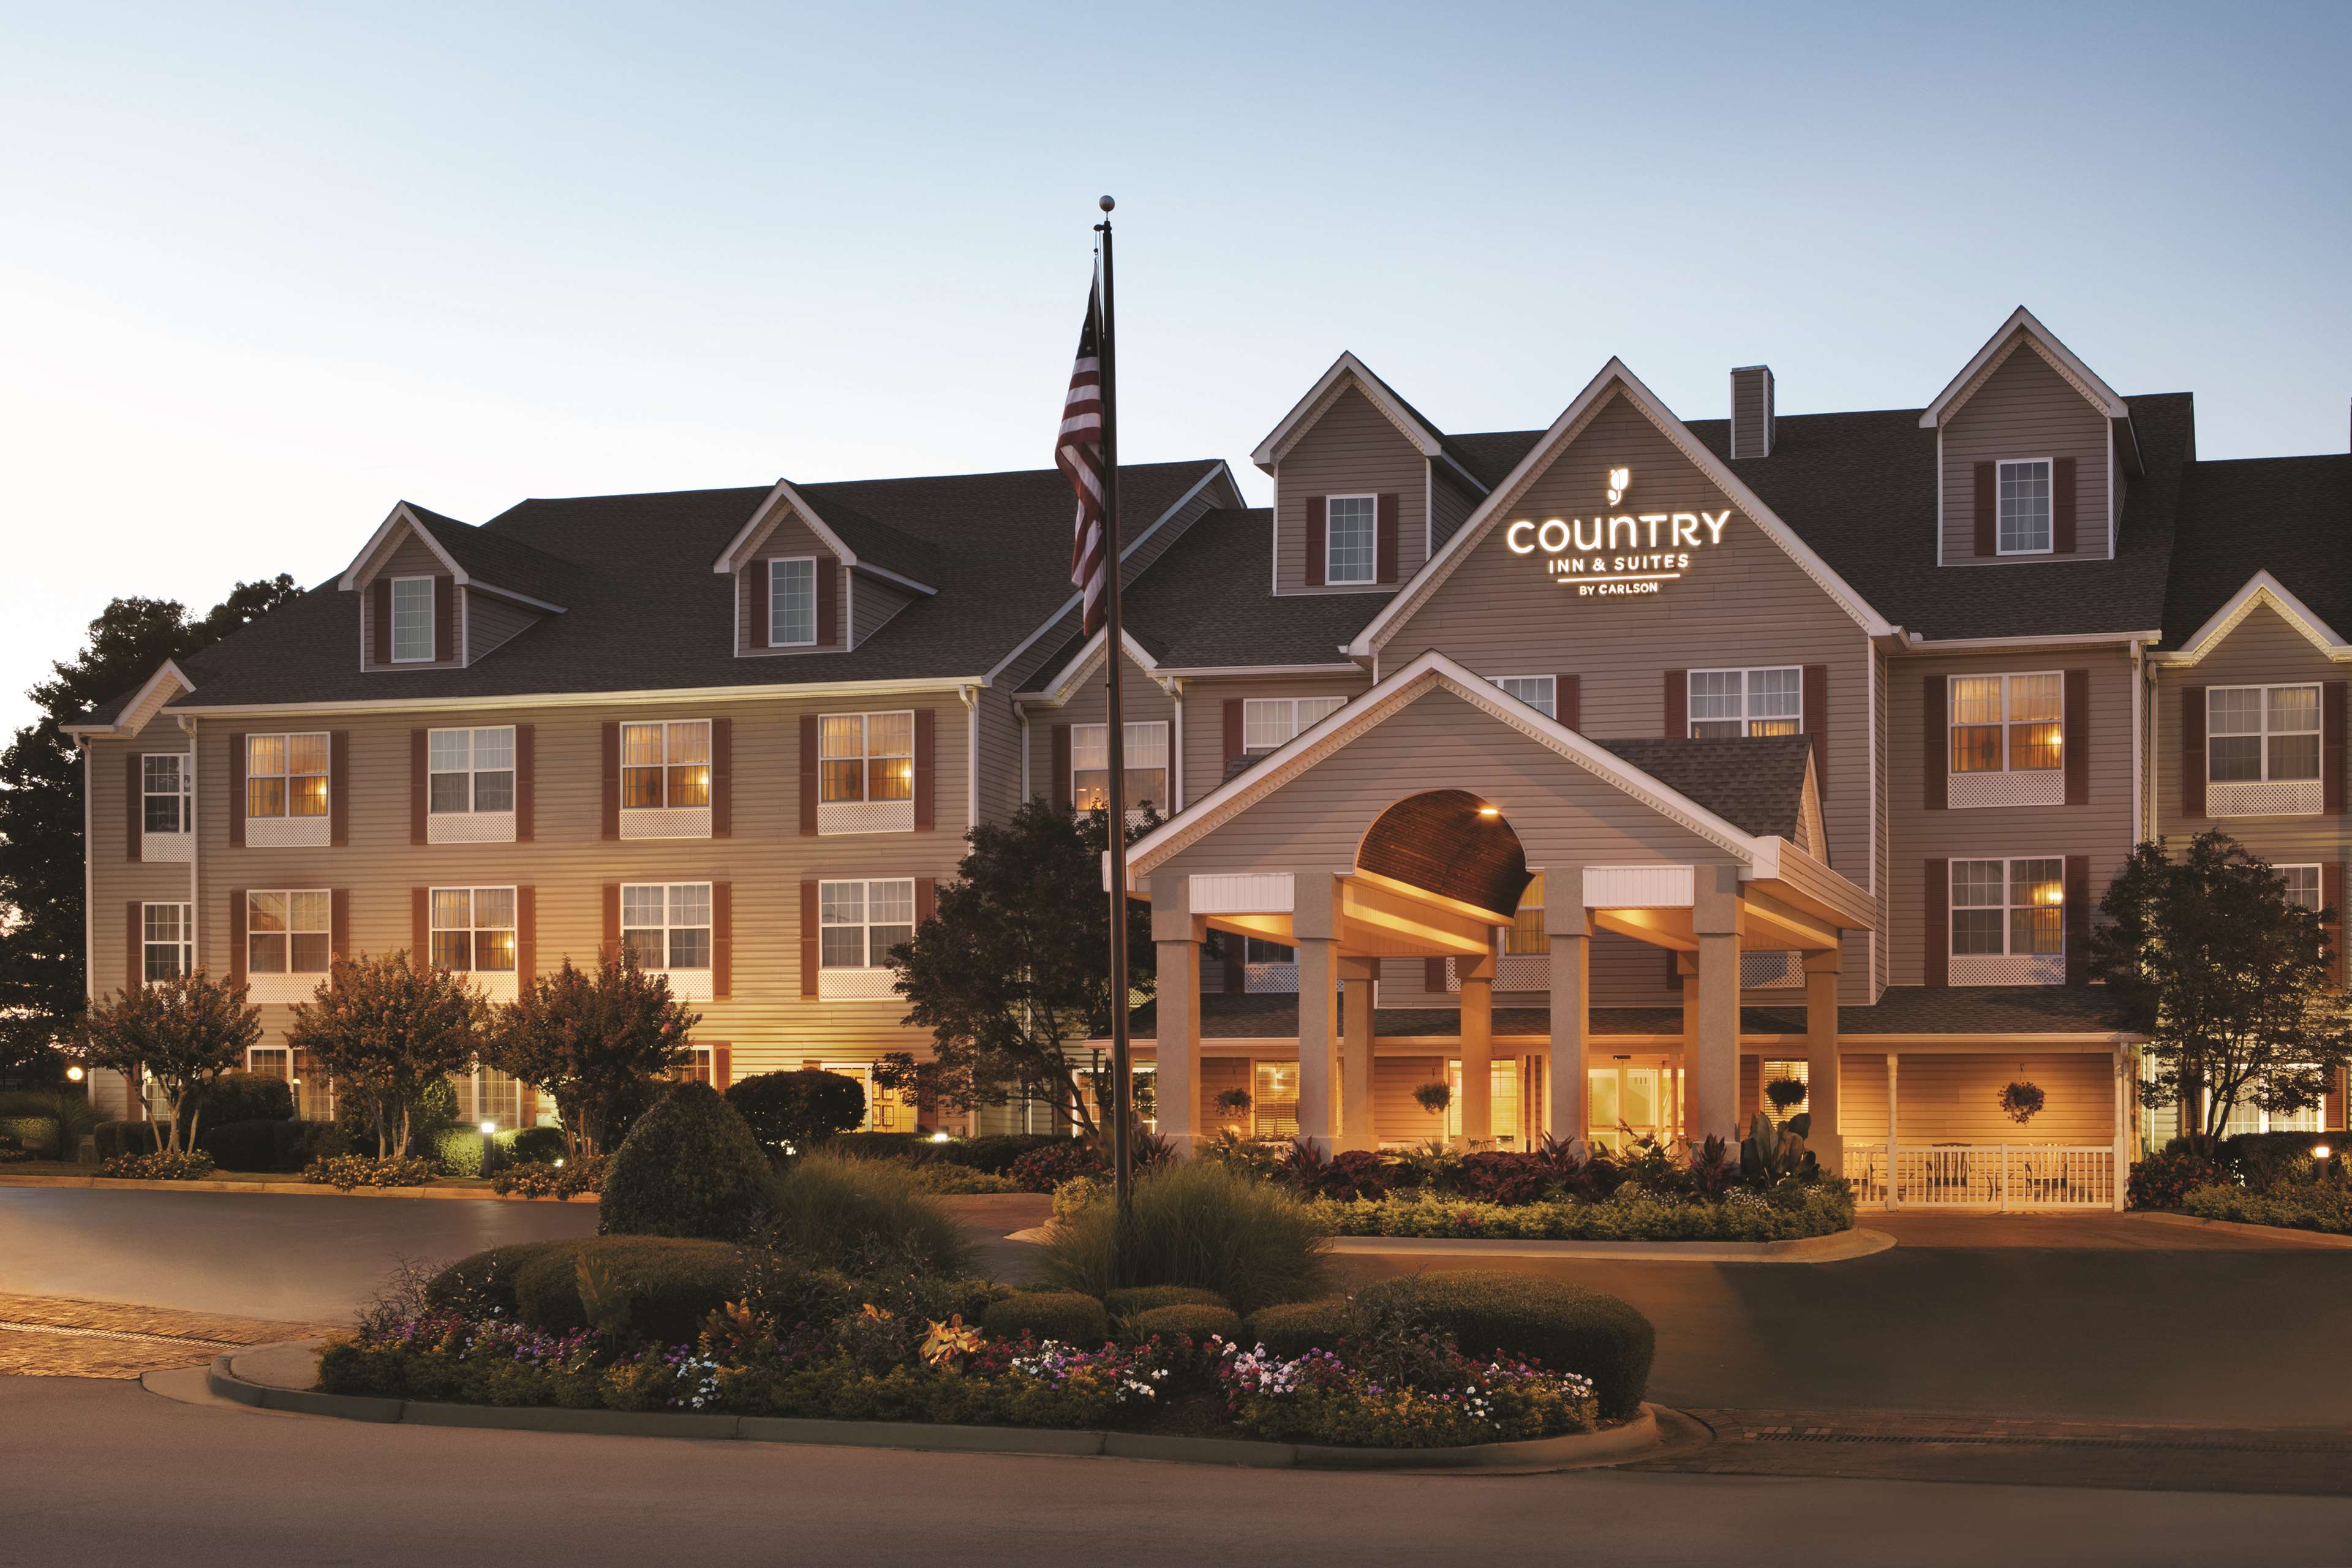 Country Inn & Suites by Radisson, Atlanta Airport North, GA Photo